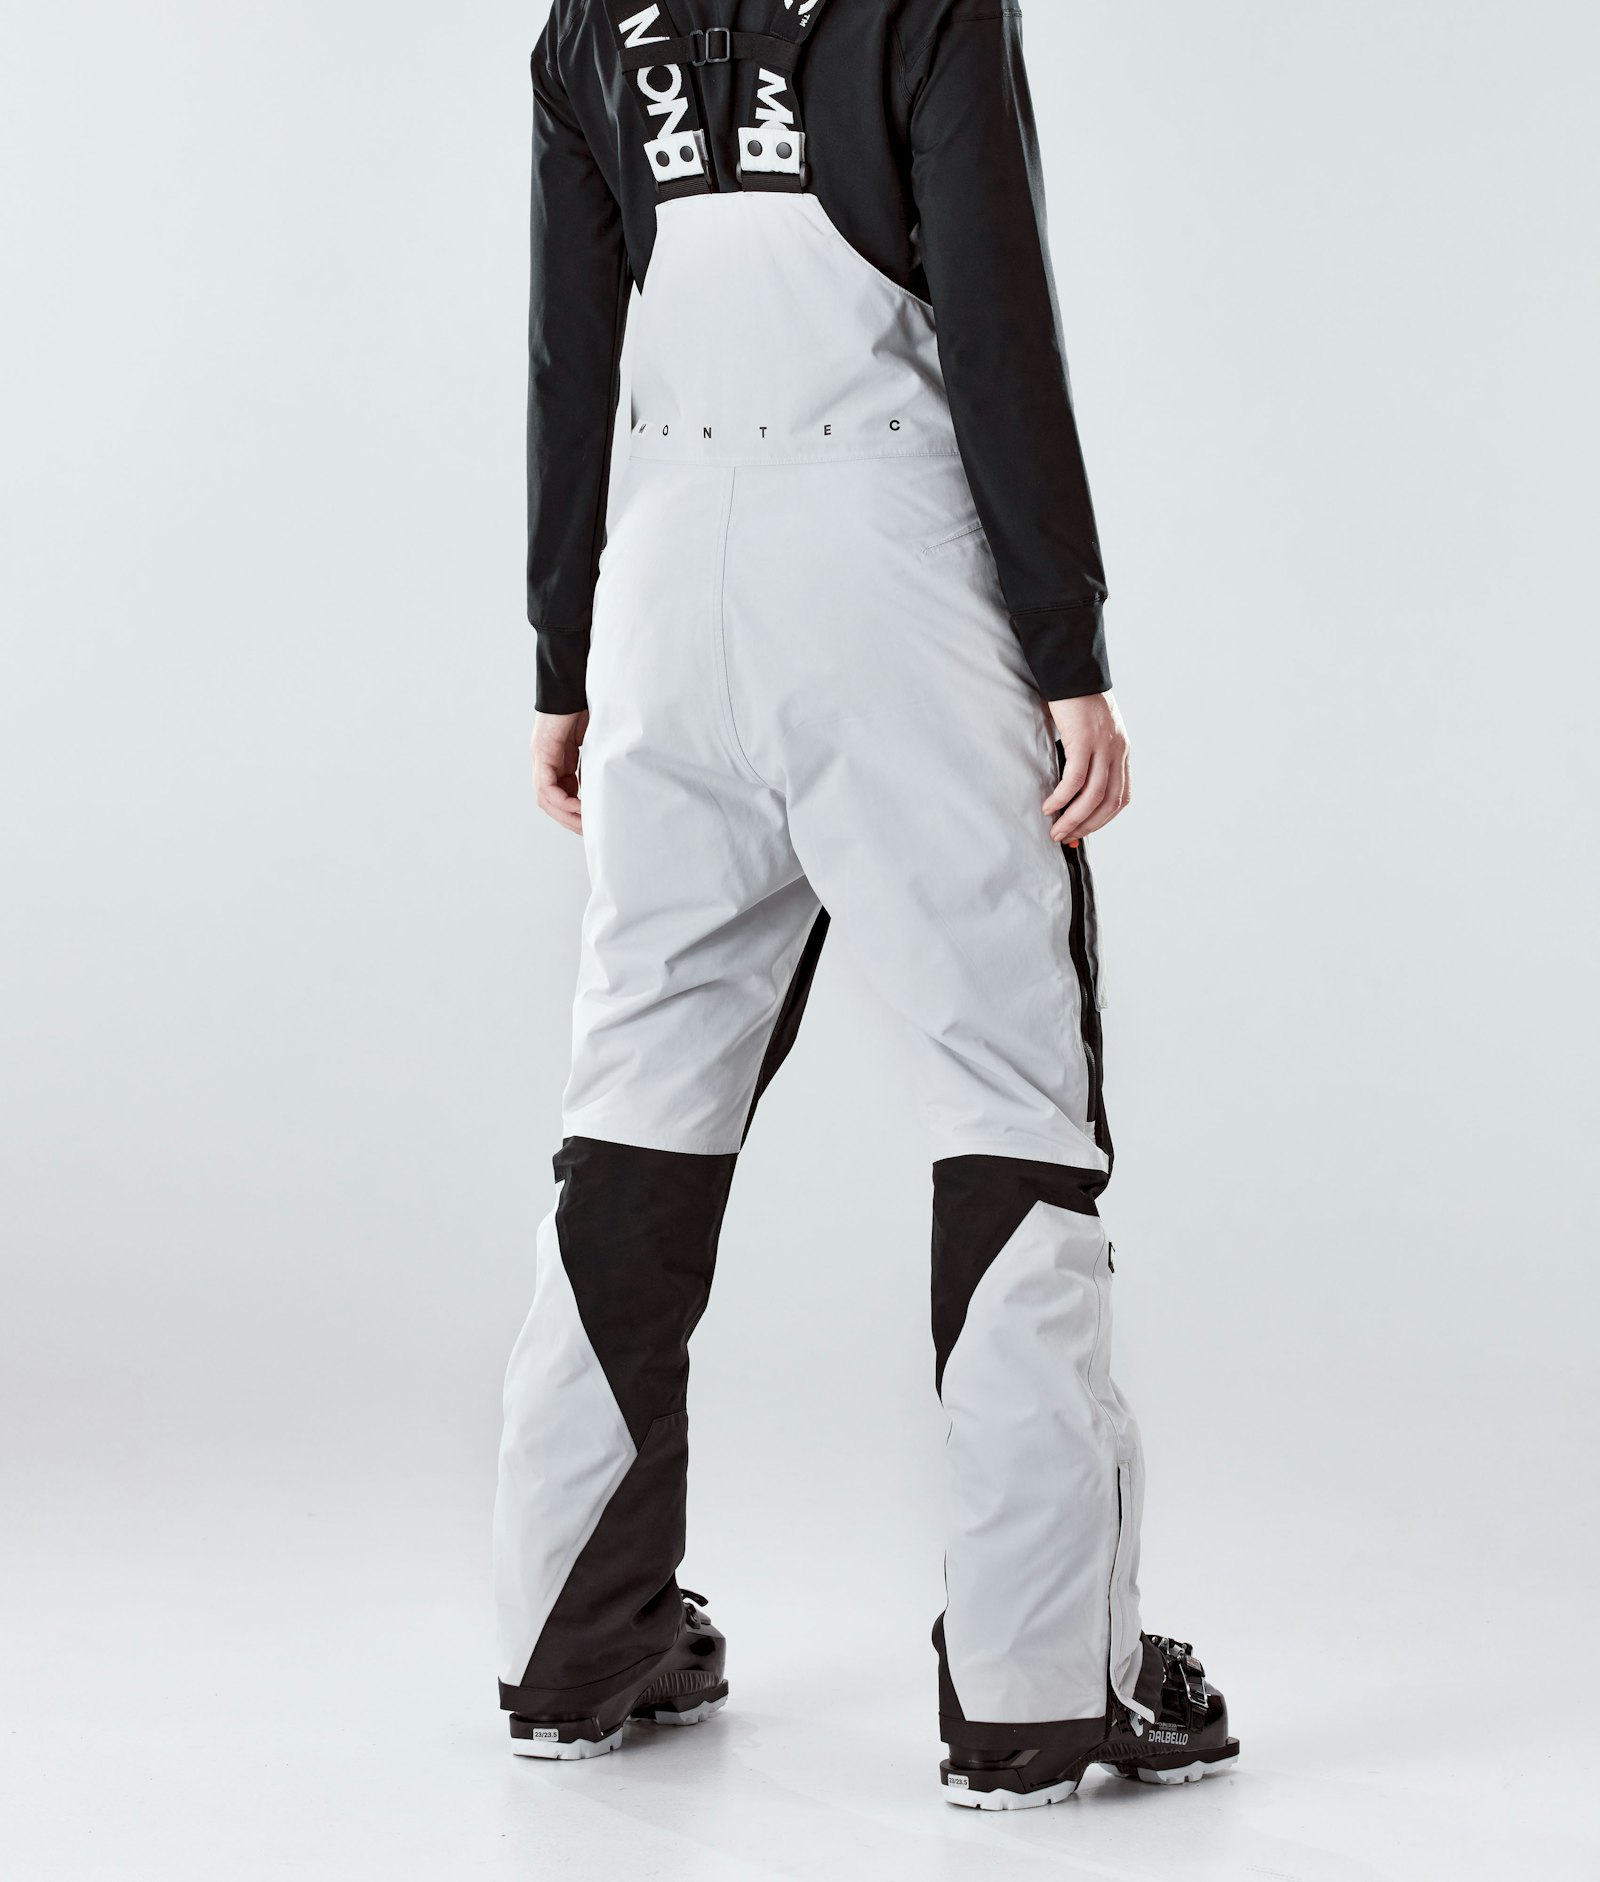 Fawk W 2020 Skihose Damen Light Grey/Black